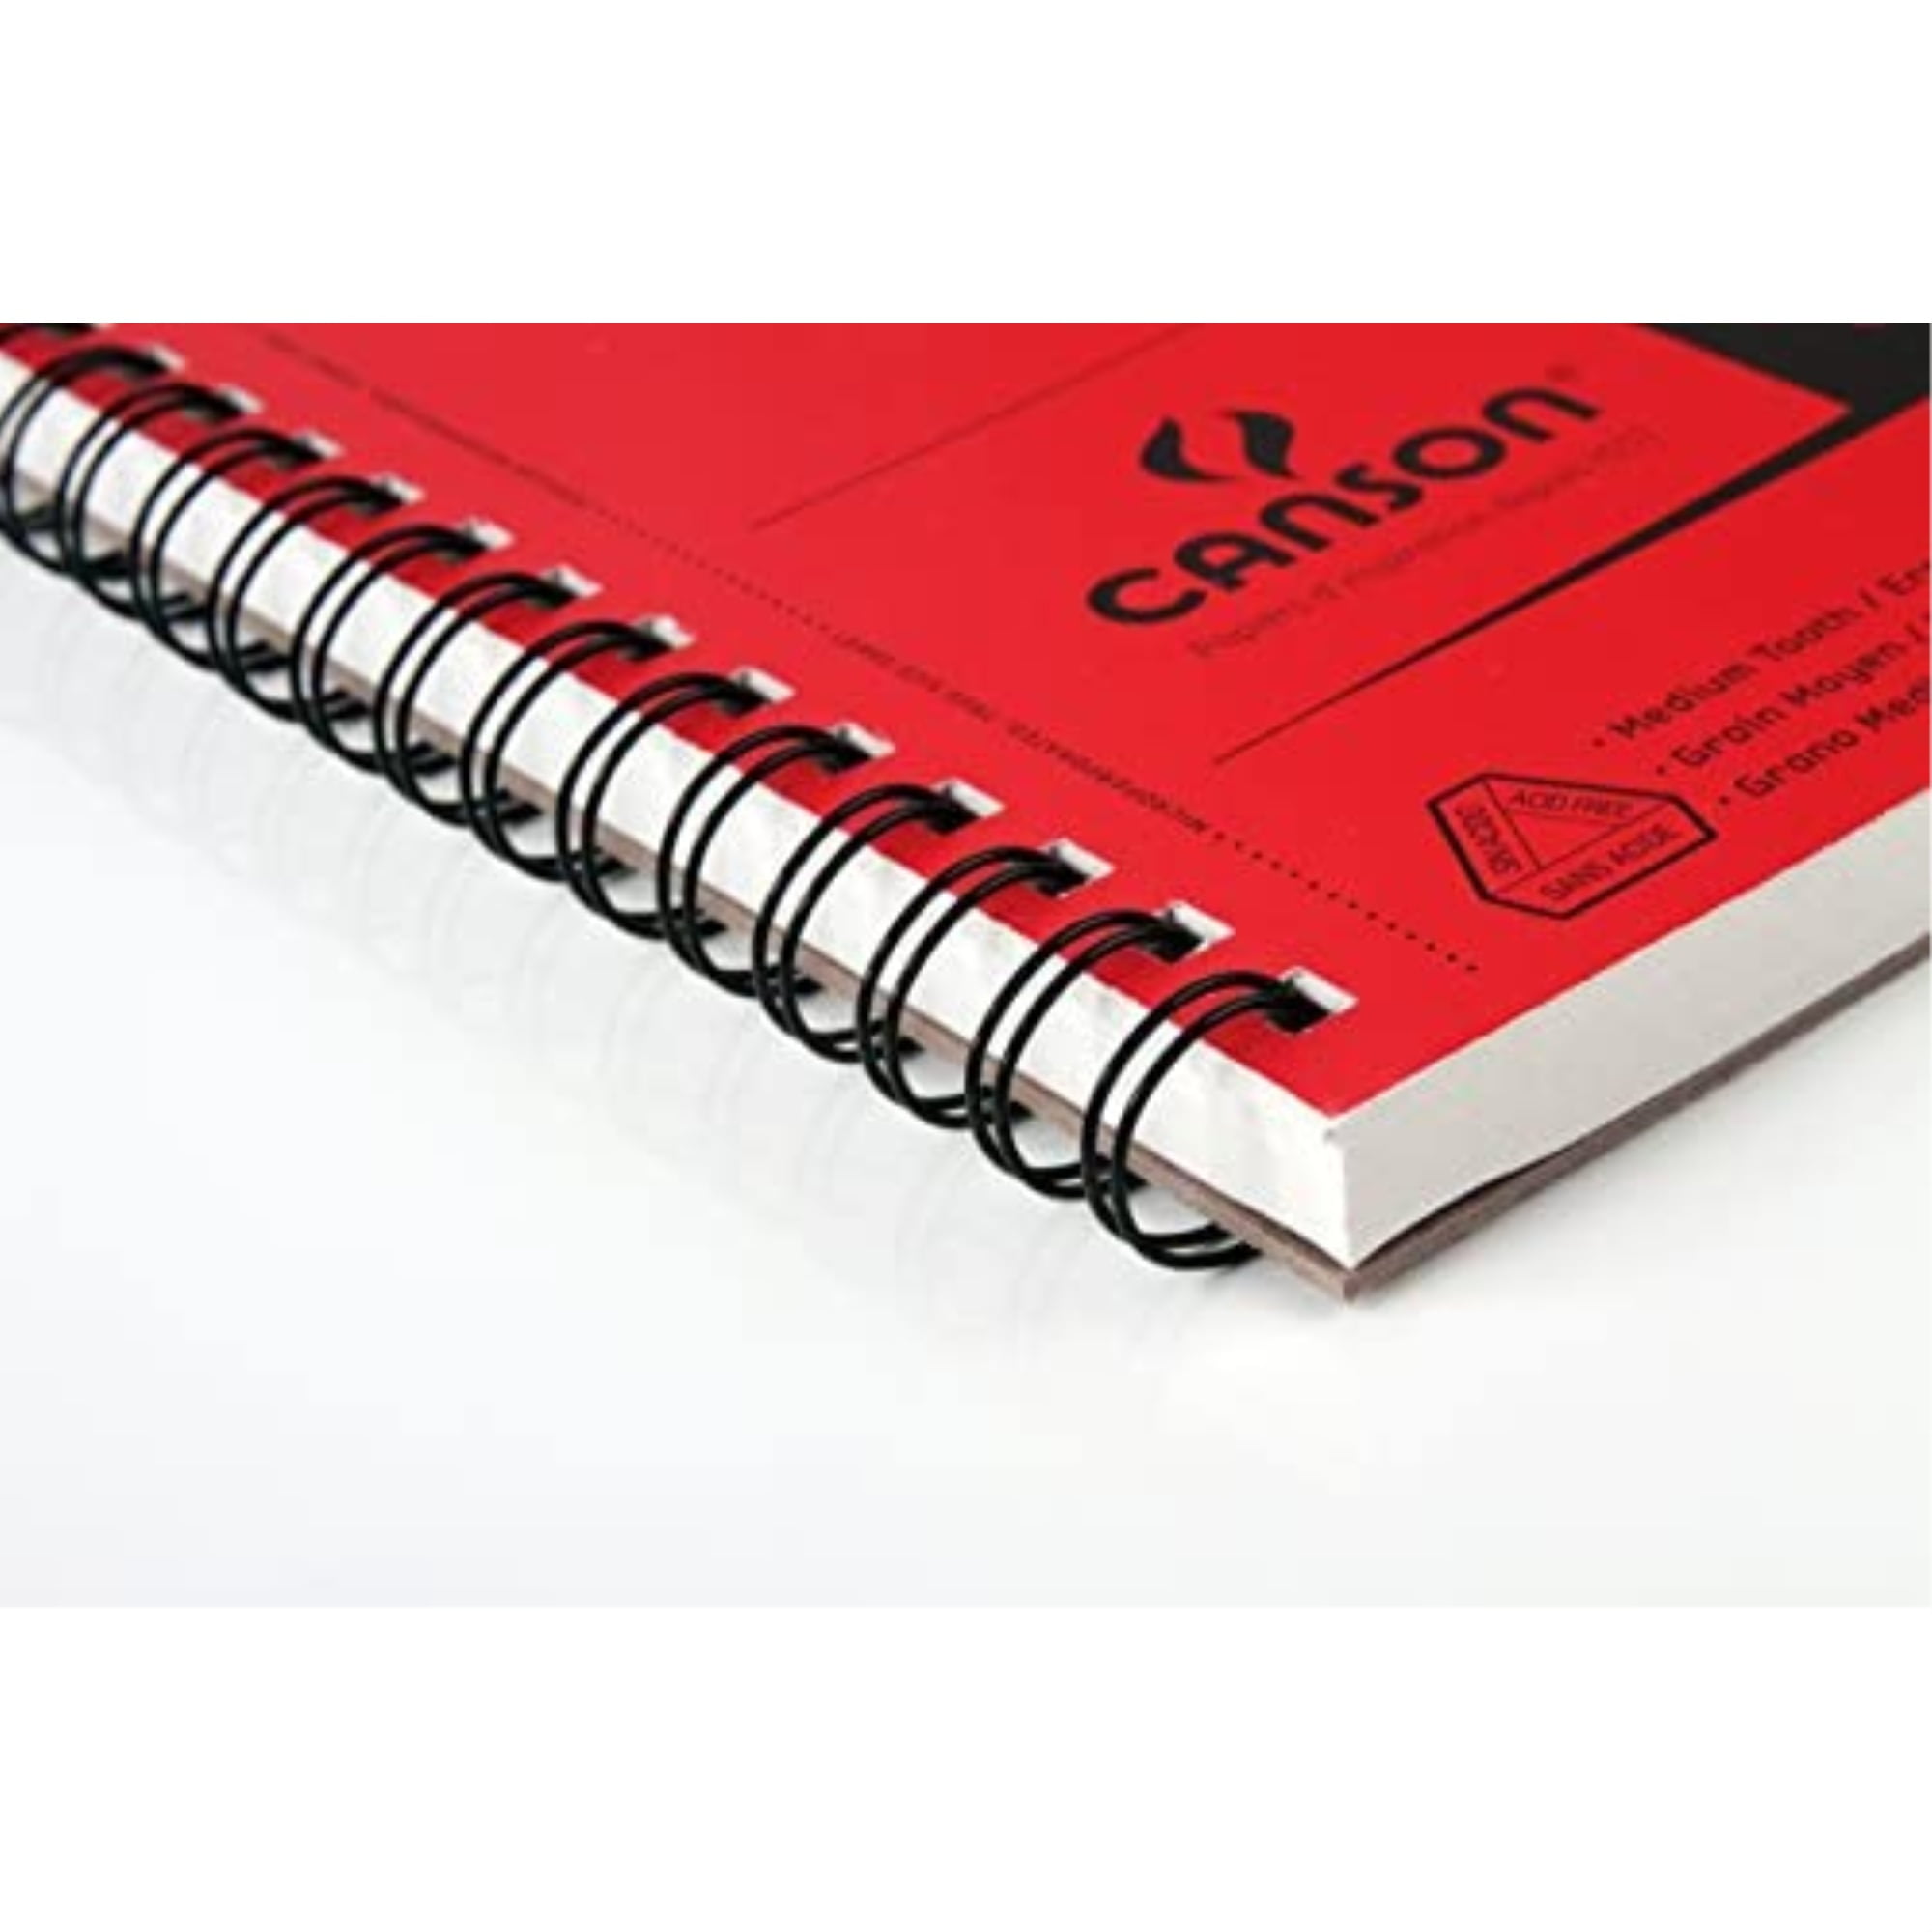 Canson sketch pad XL Mix Media 30 sheets A4 300g/m² spiral binding